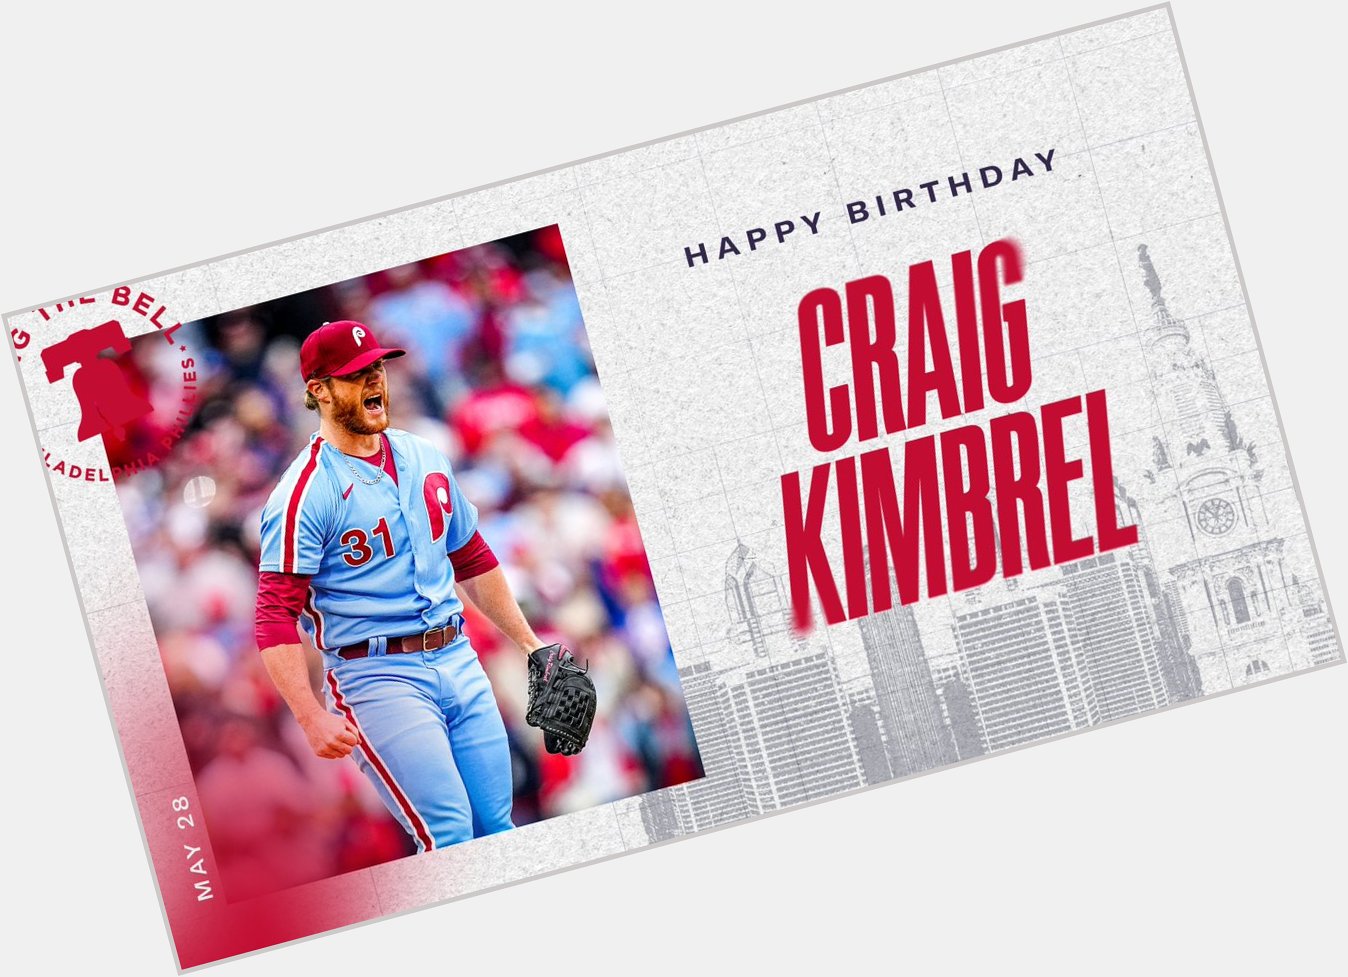 Everyone wish our guy Craig Kimbrel a happy birthday! 